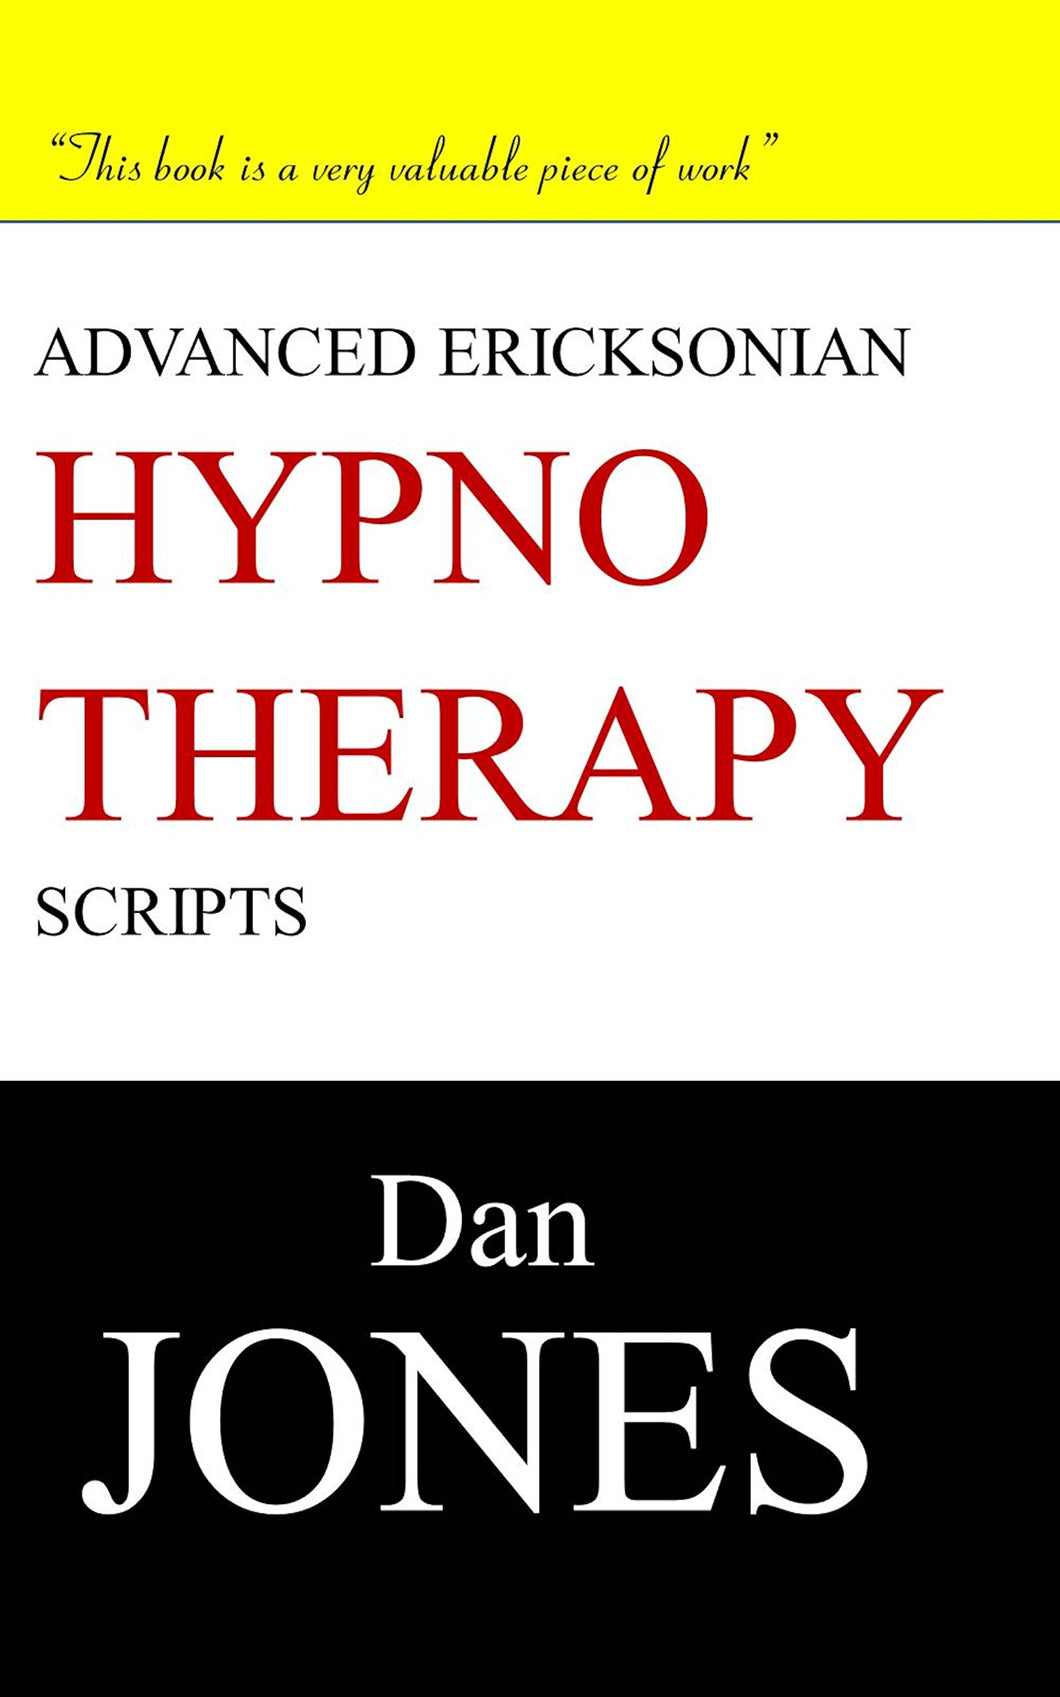 Advanced Ericksonian Hypnotherapy Scripts